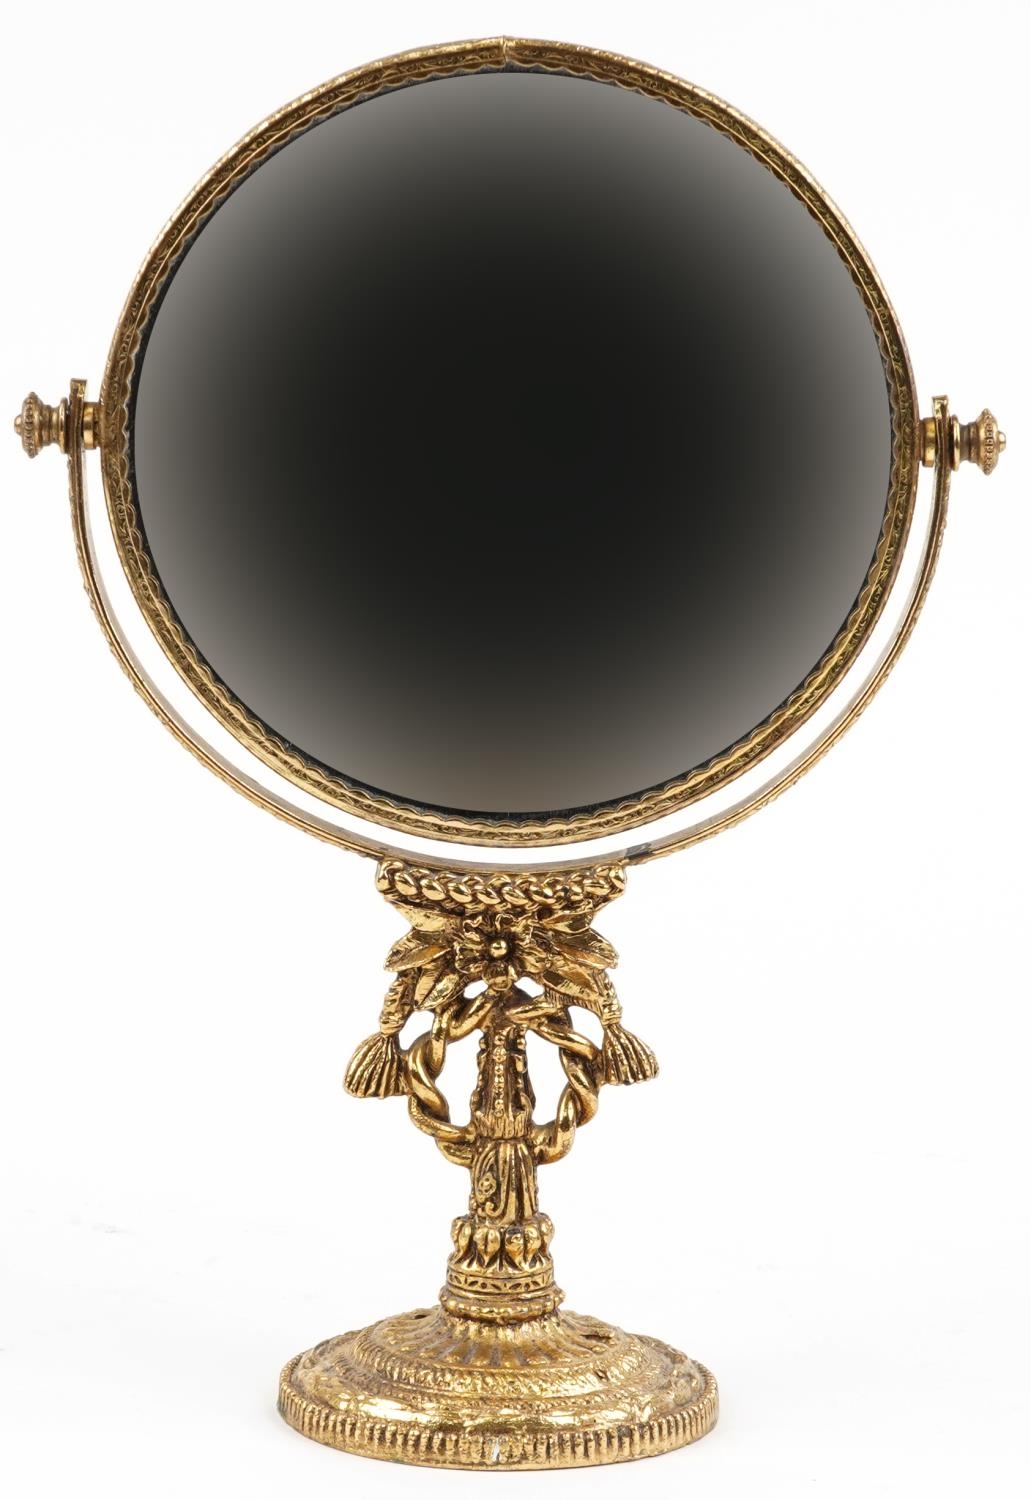 Ornate American brass vanity swing mirror, 28cm high - Image 3 of 5